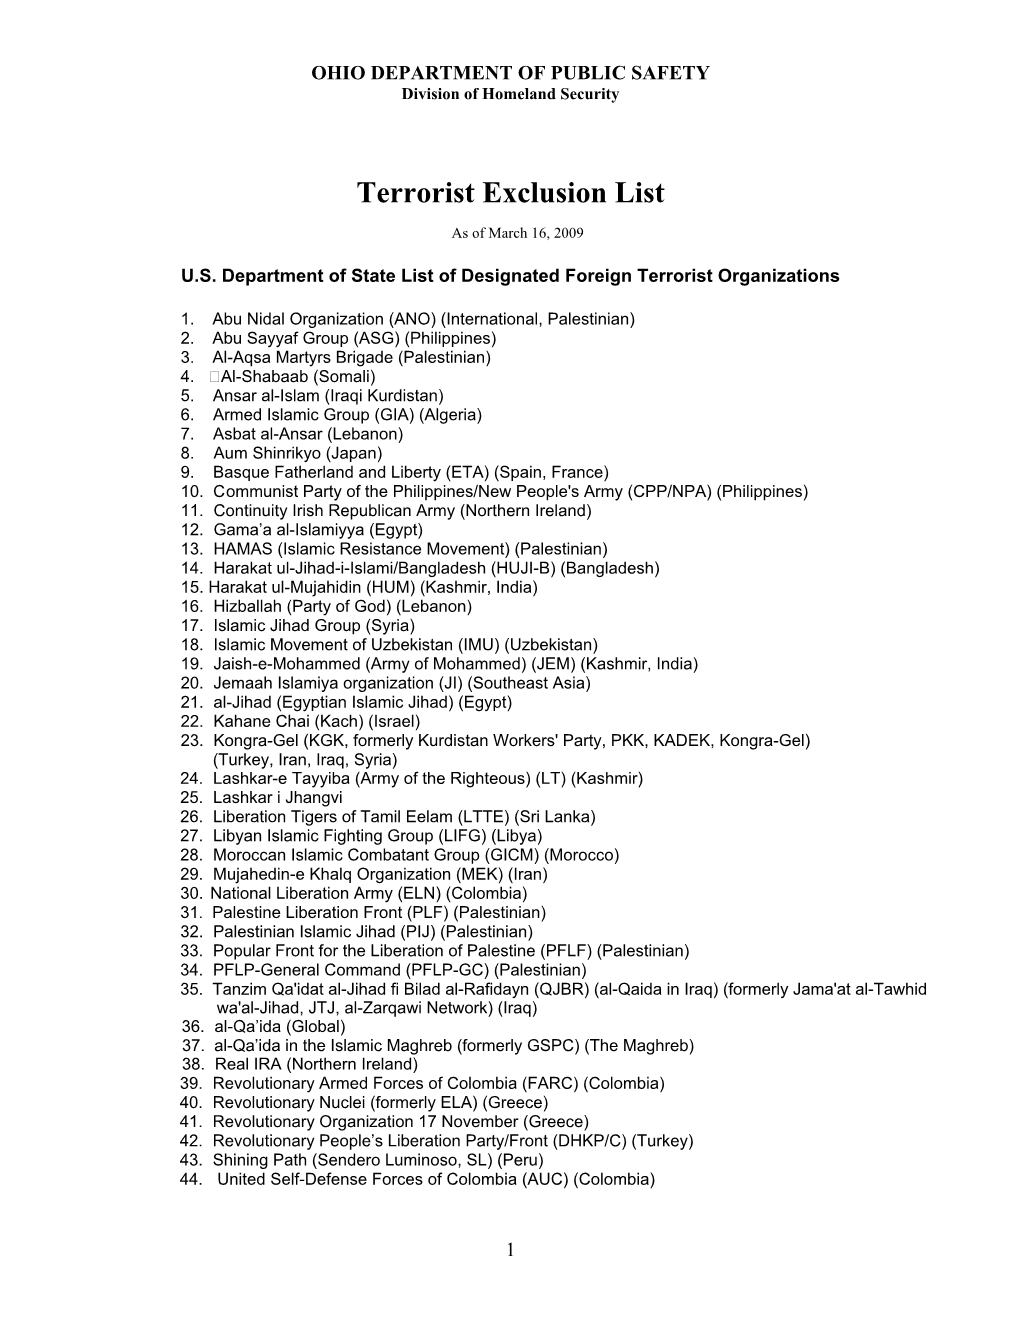 Terrorist Exclusion List